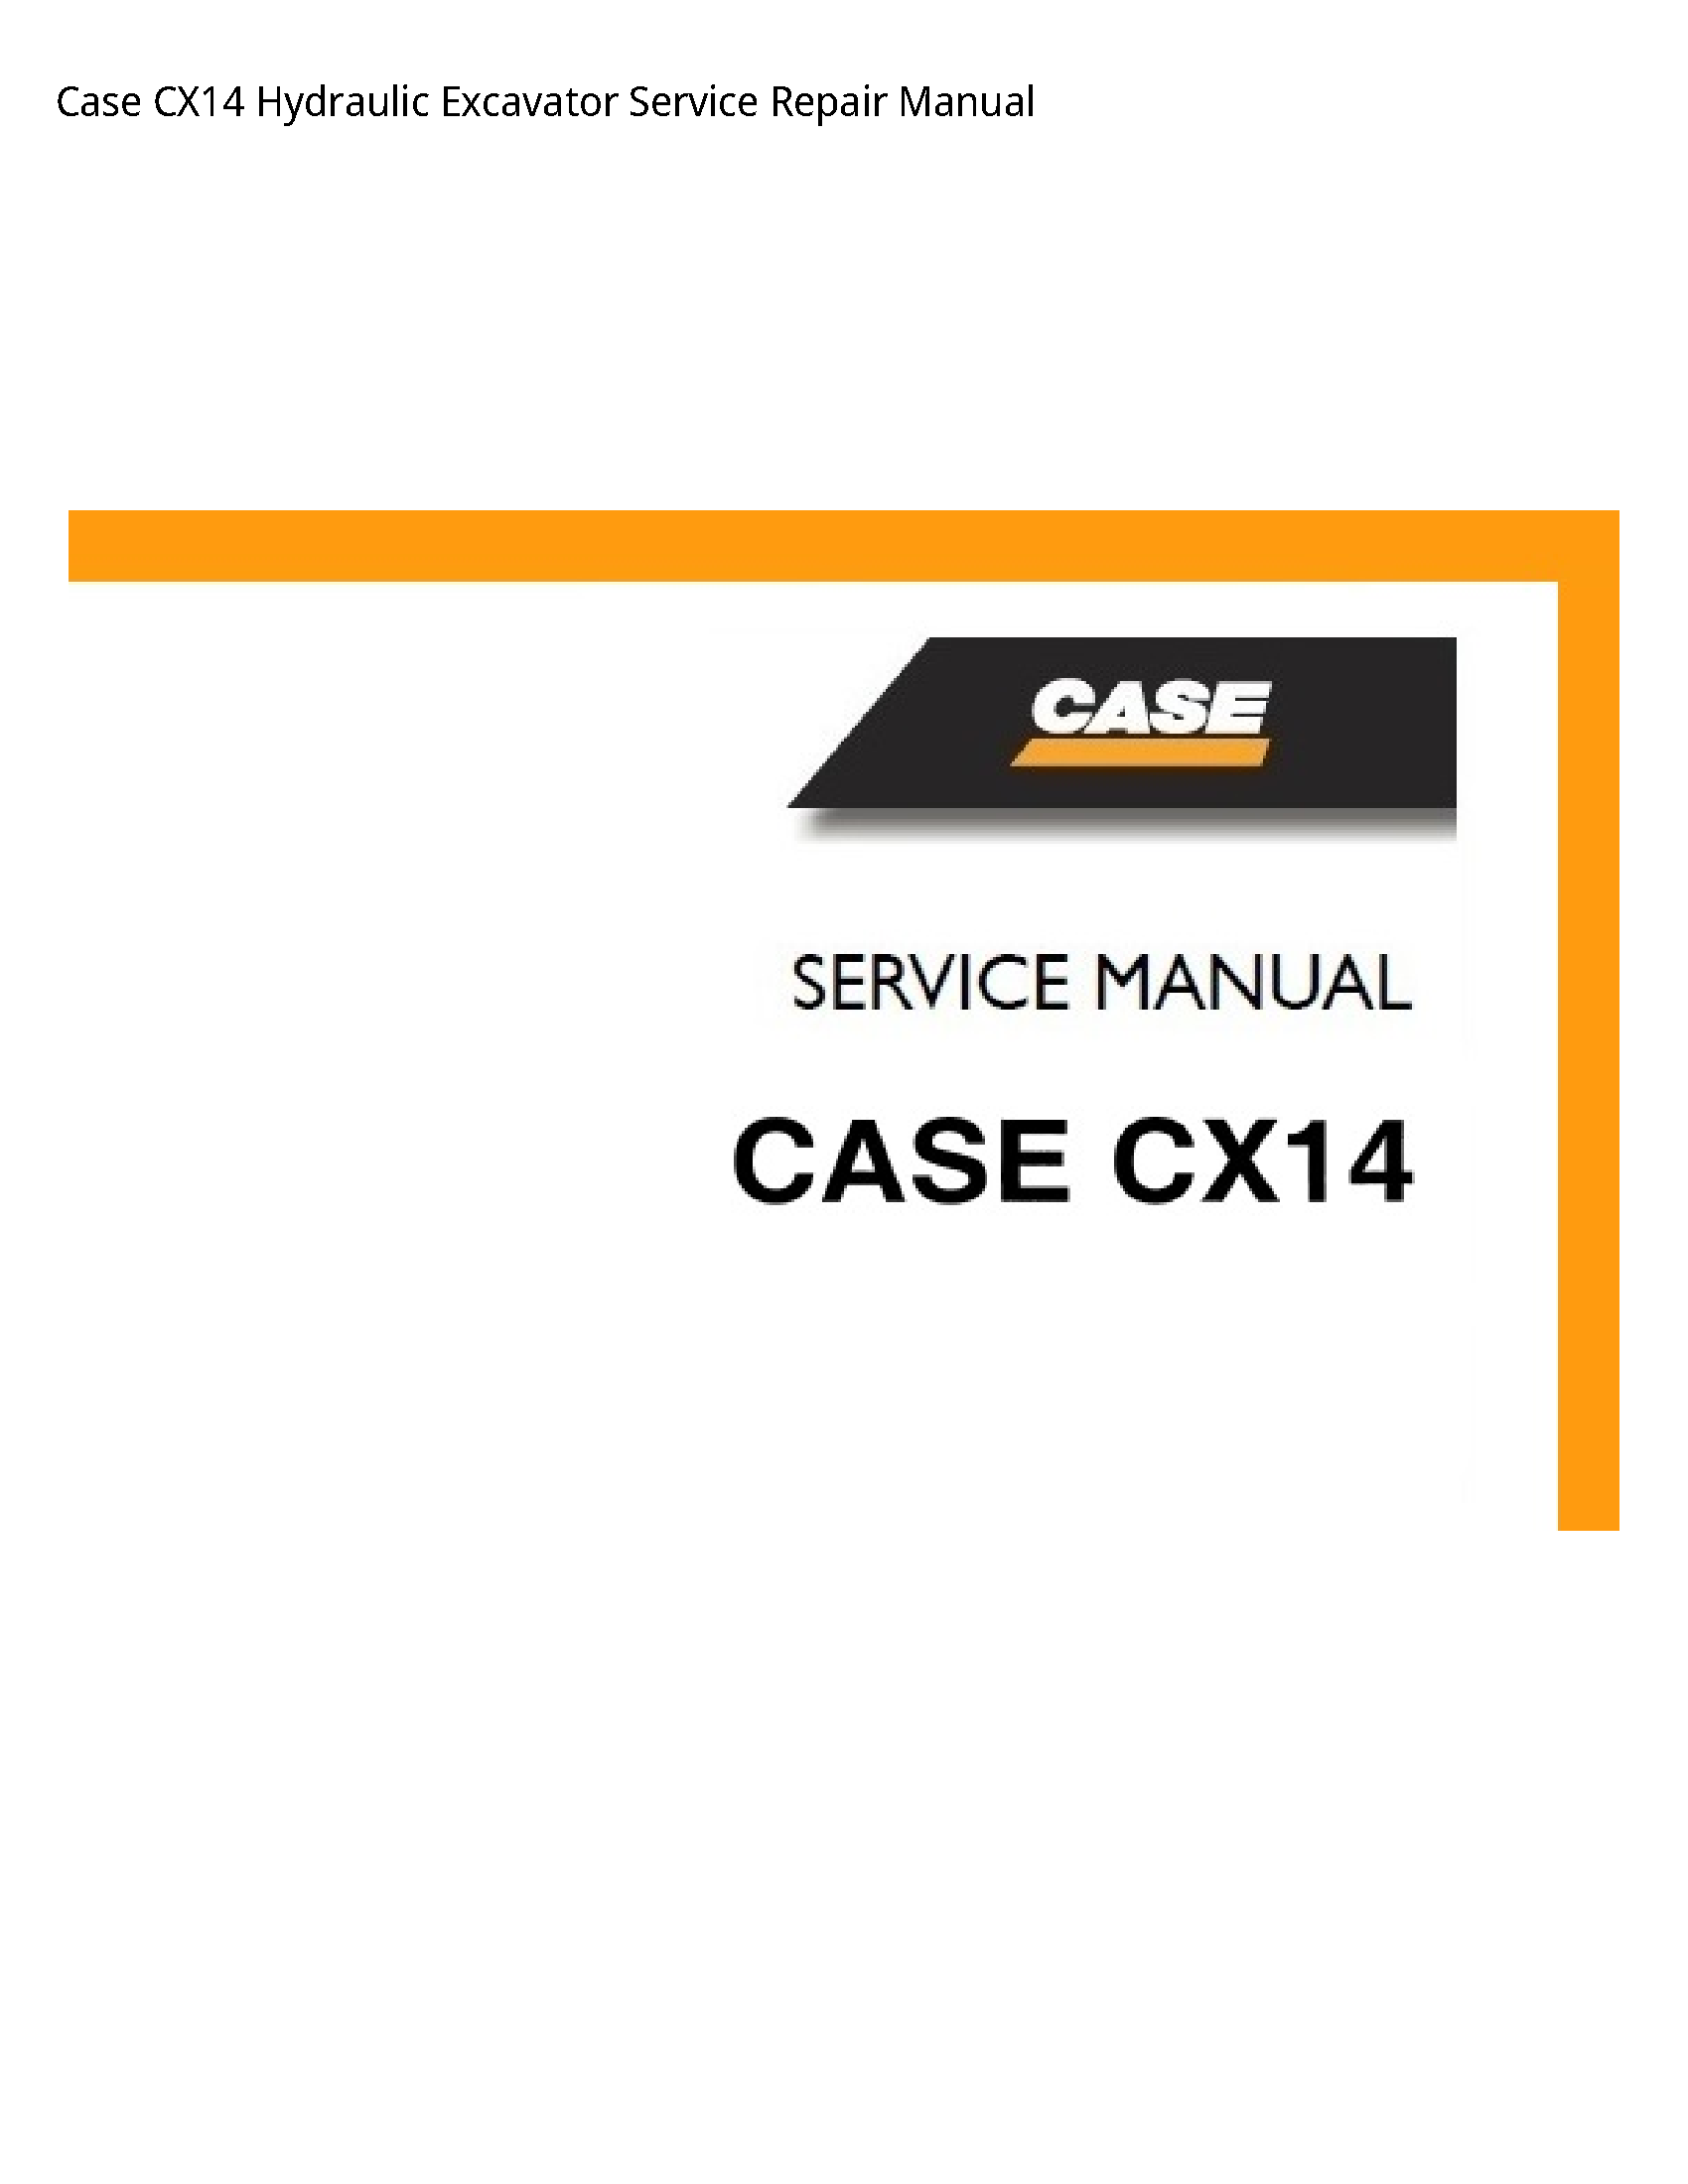 Case/Case IH CX14 Hydraulic Excavator manual